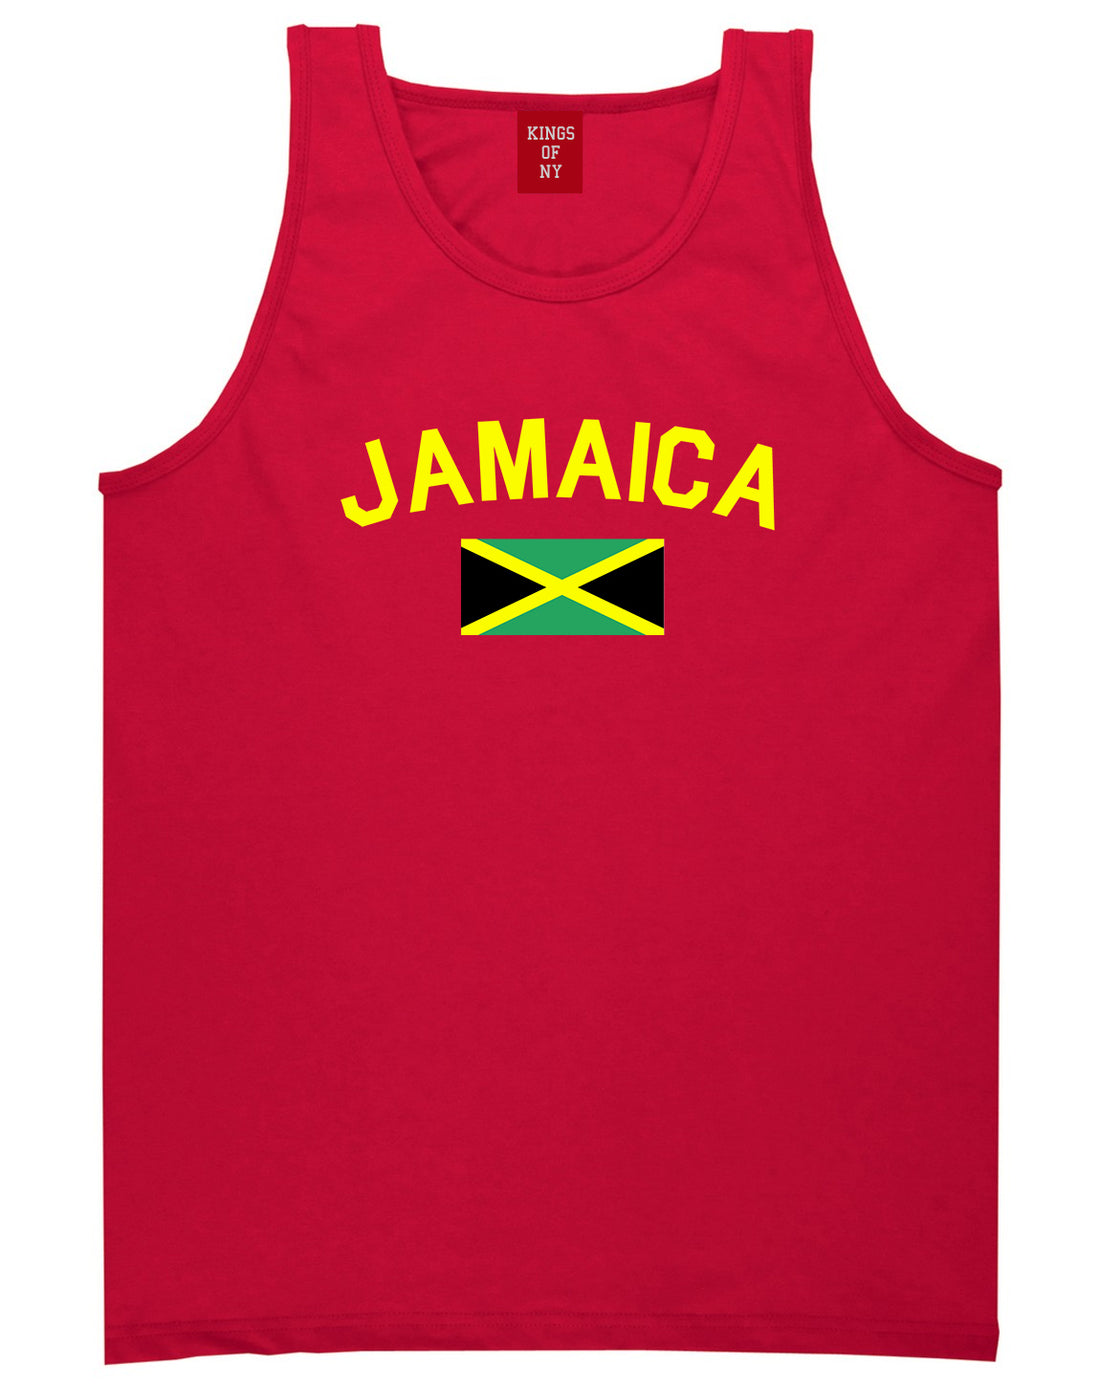 Jamaica With Jamaican Flag Mens Tank Top Shirt Red